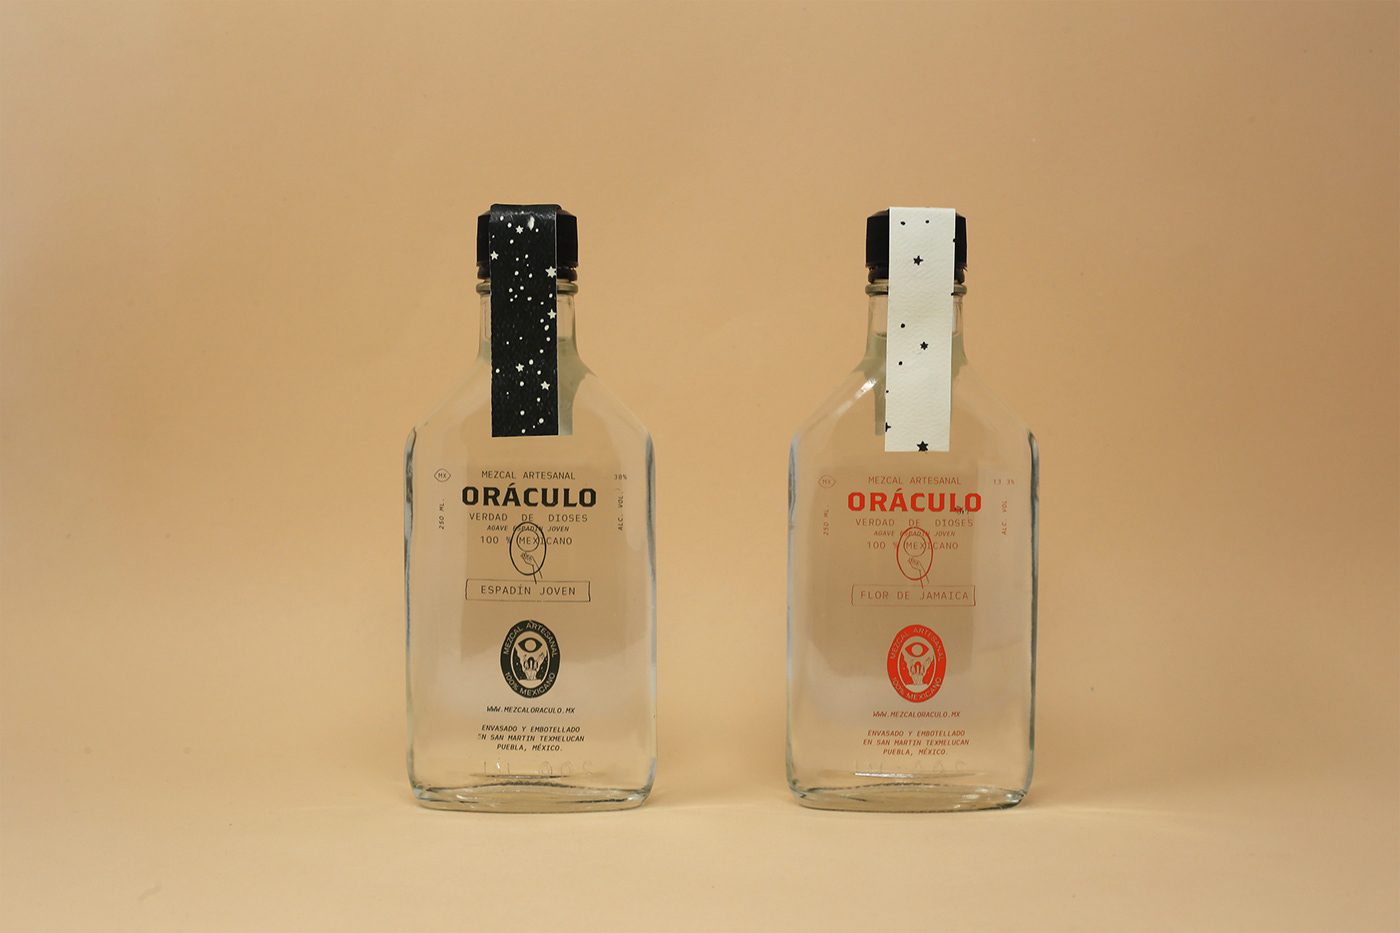 mezcal mexico alcohol Mexican jamaica Tamarindo Mango espadin Tequila oaxaca Label Packaging